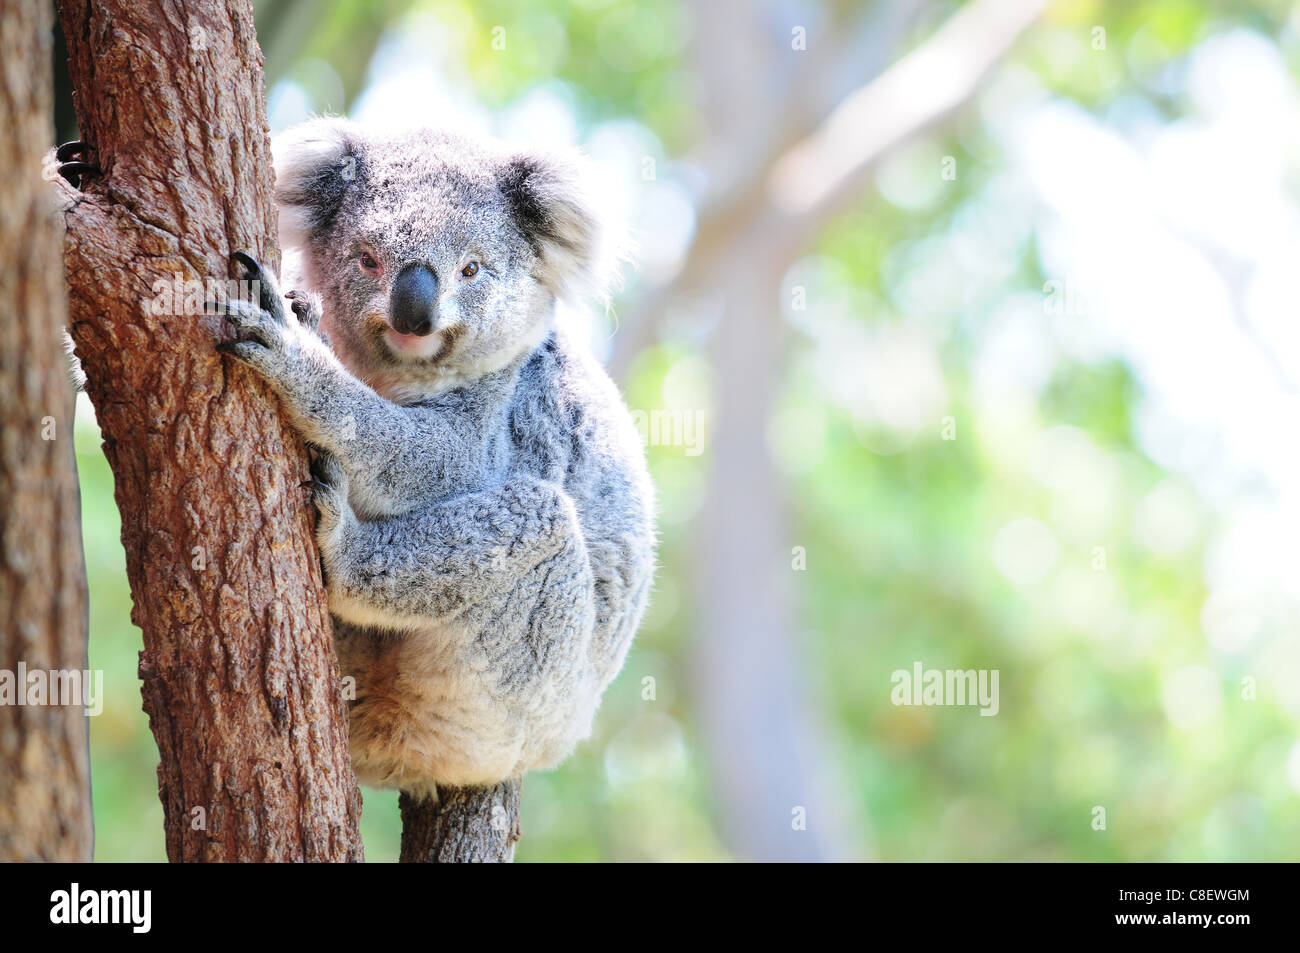 Carino Australian Koala nel suo habitat naturale Foto Stock